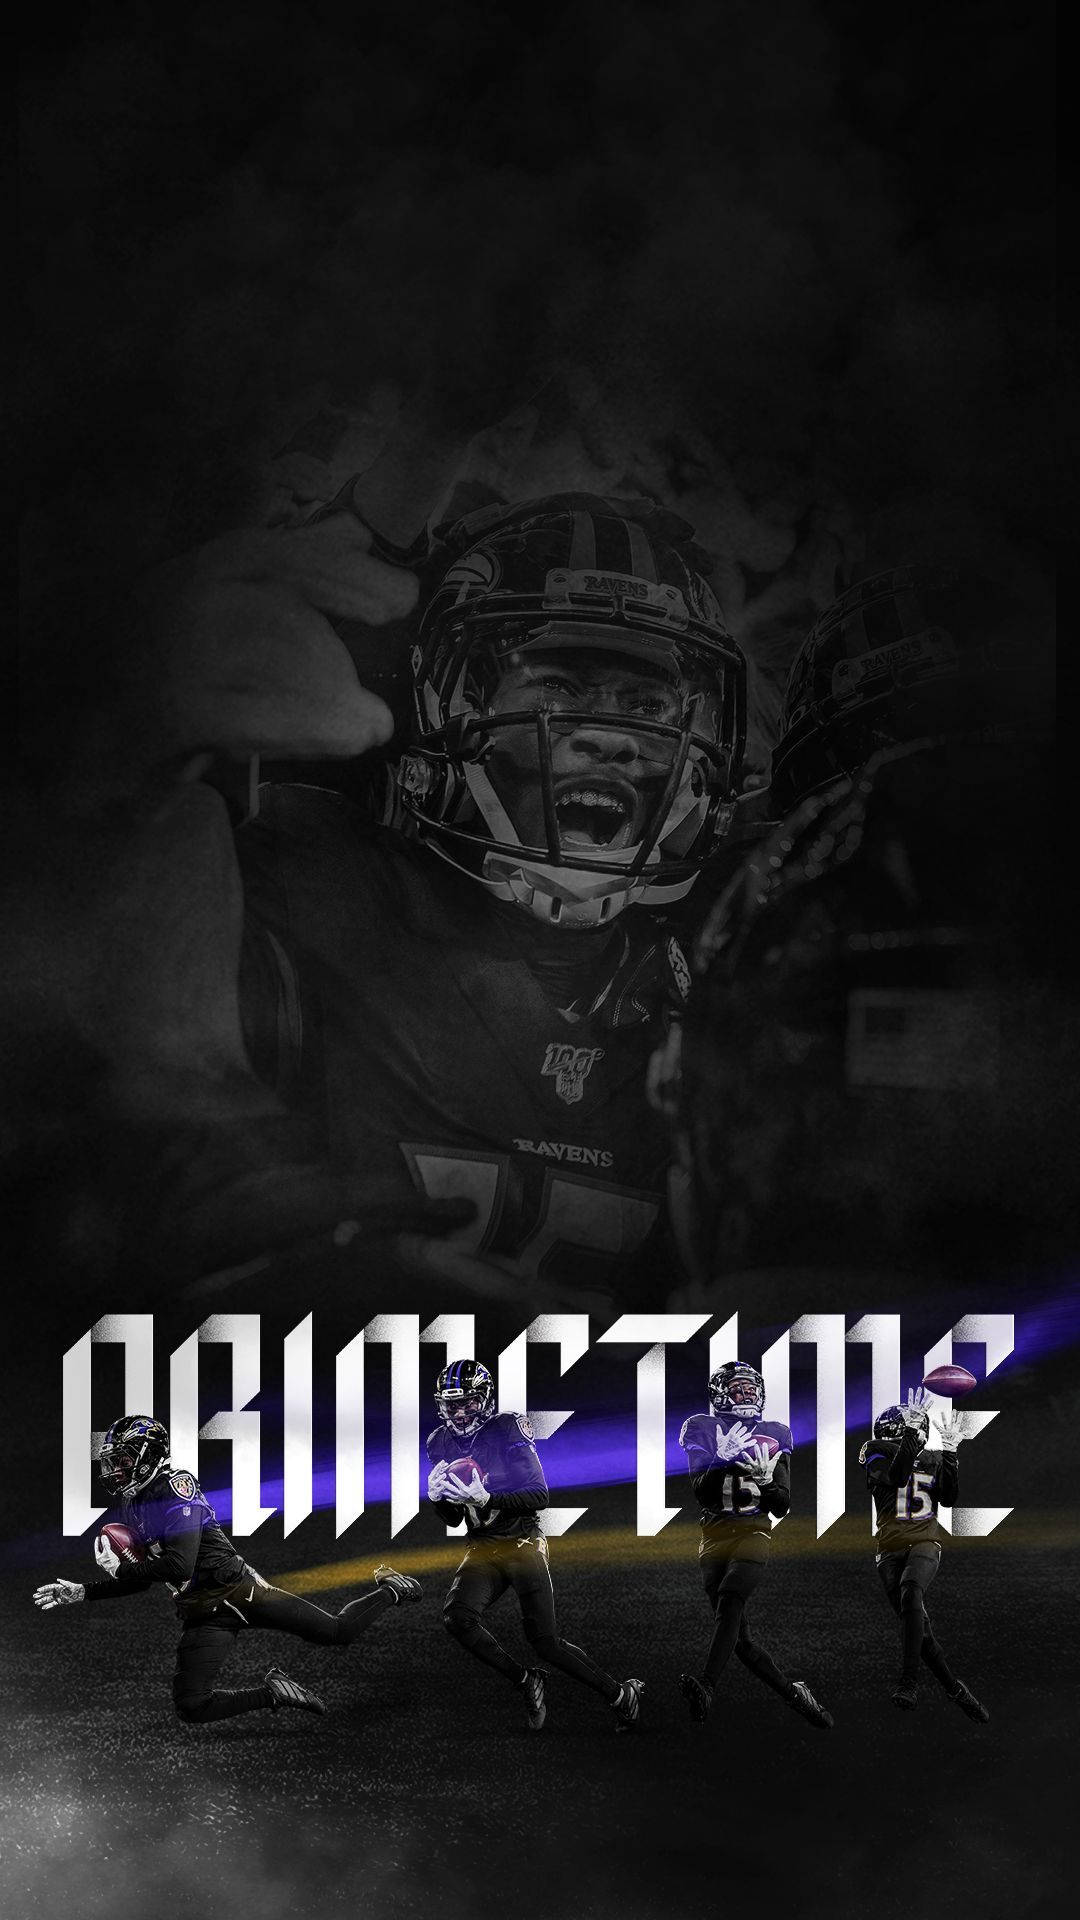 Baltimore Ravens Gametime Poster Iphone Wallpaper